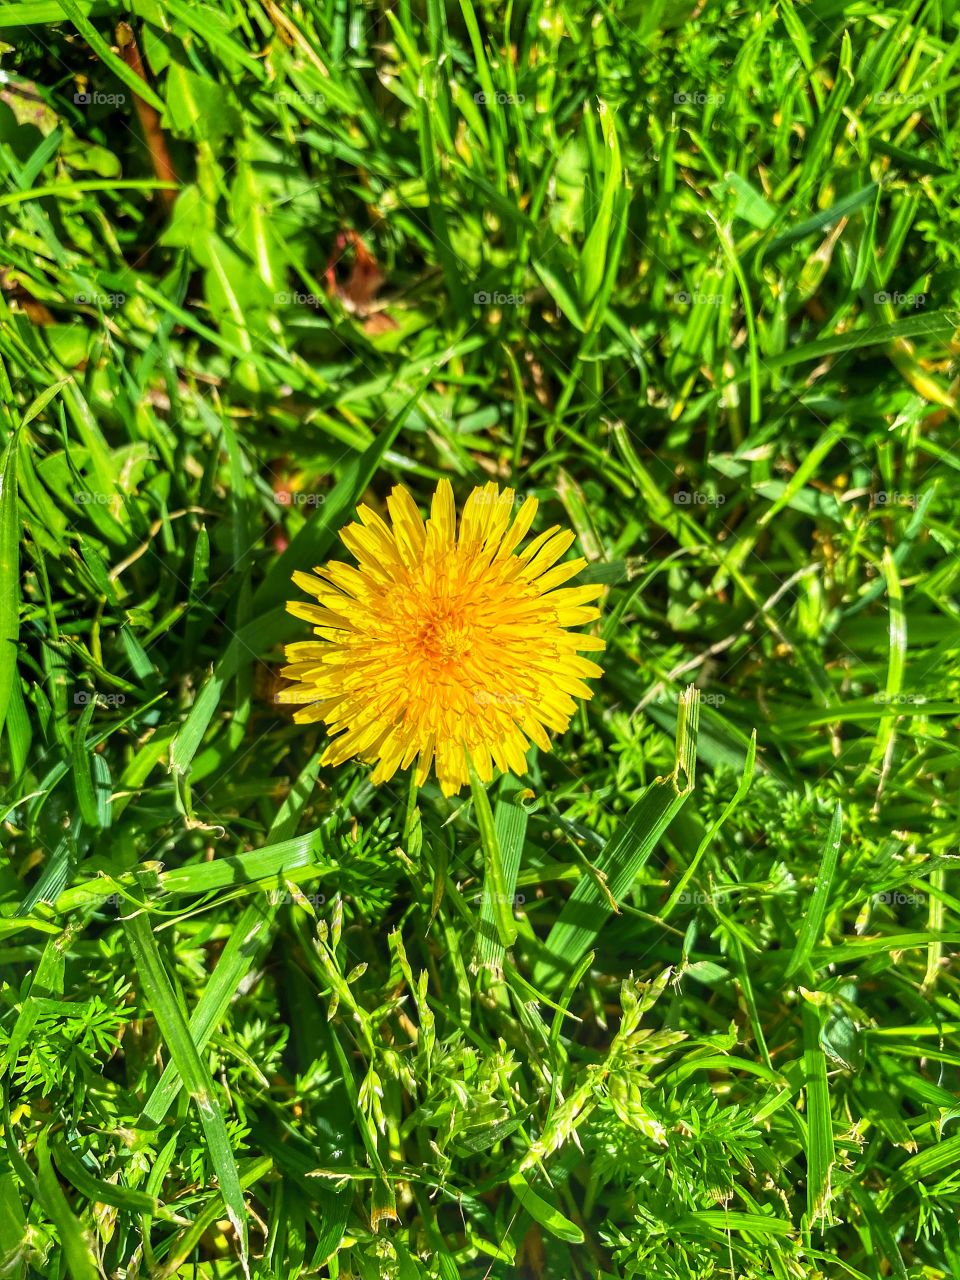 Yellow flower in grass 